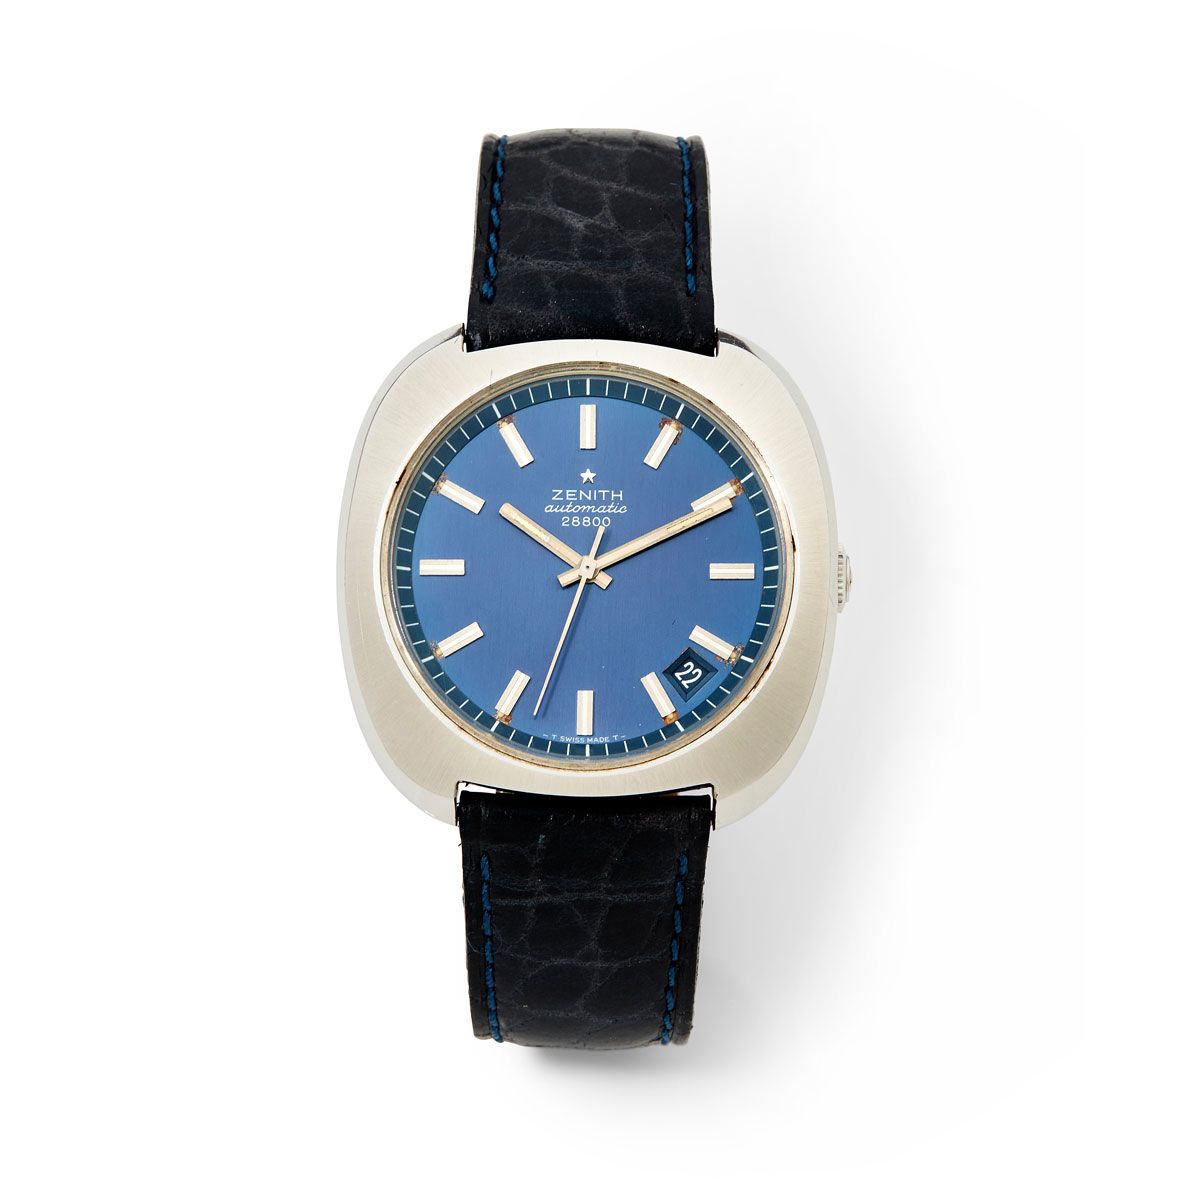 Null Zenith, no. 01.1240.290, circa 1970.

A steel tonneau watch with an asserti&hellip;